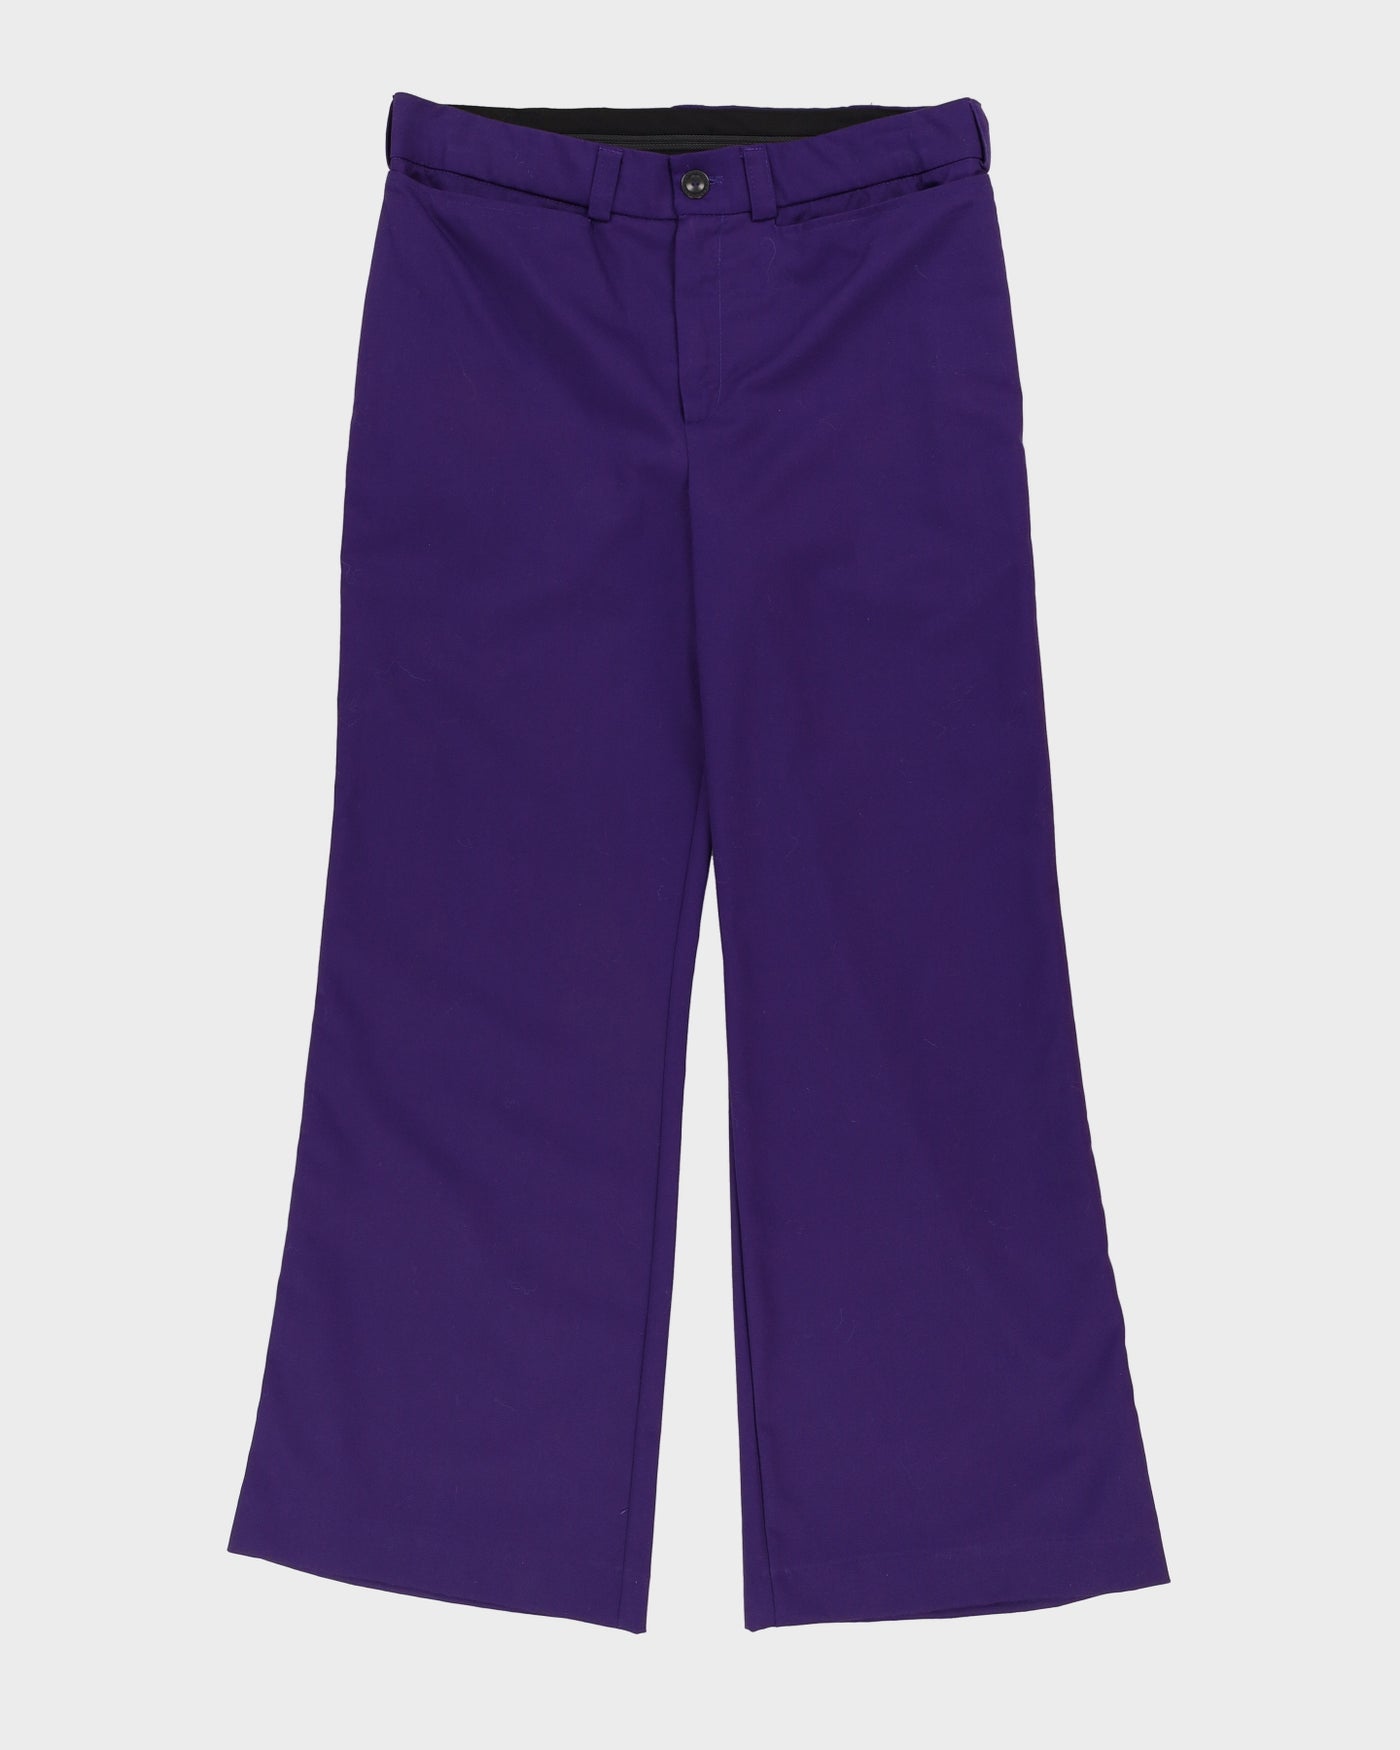 Rokit Originals 70s Purple Trousers - W35